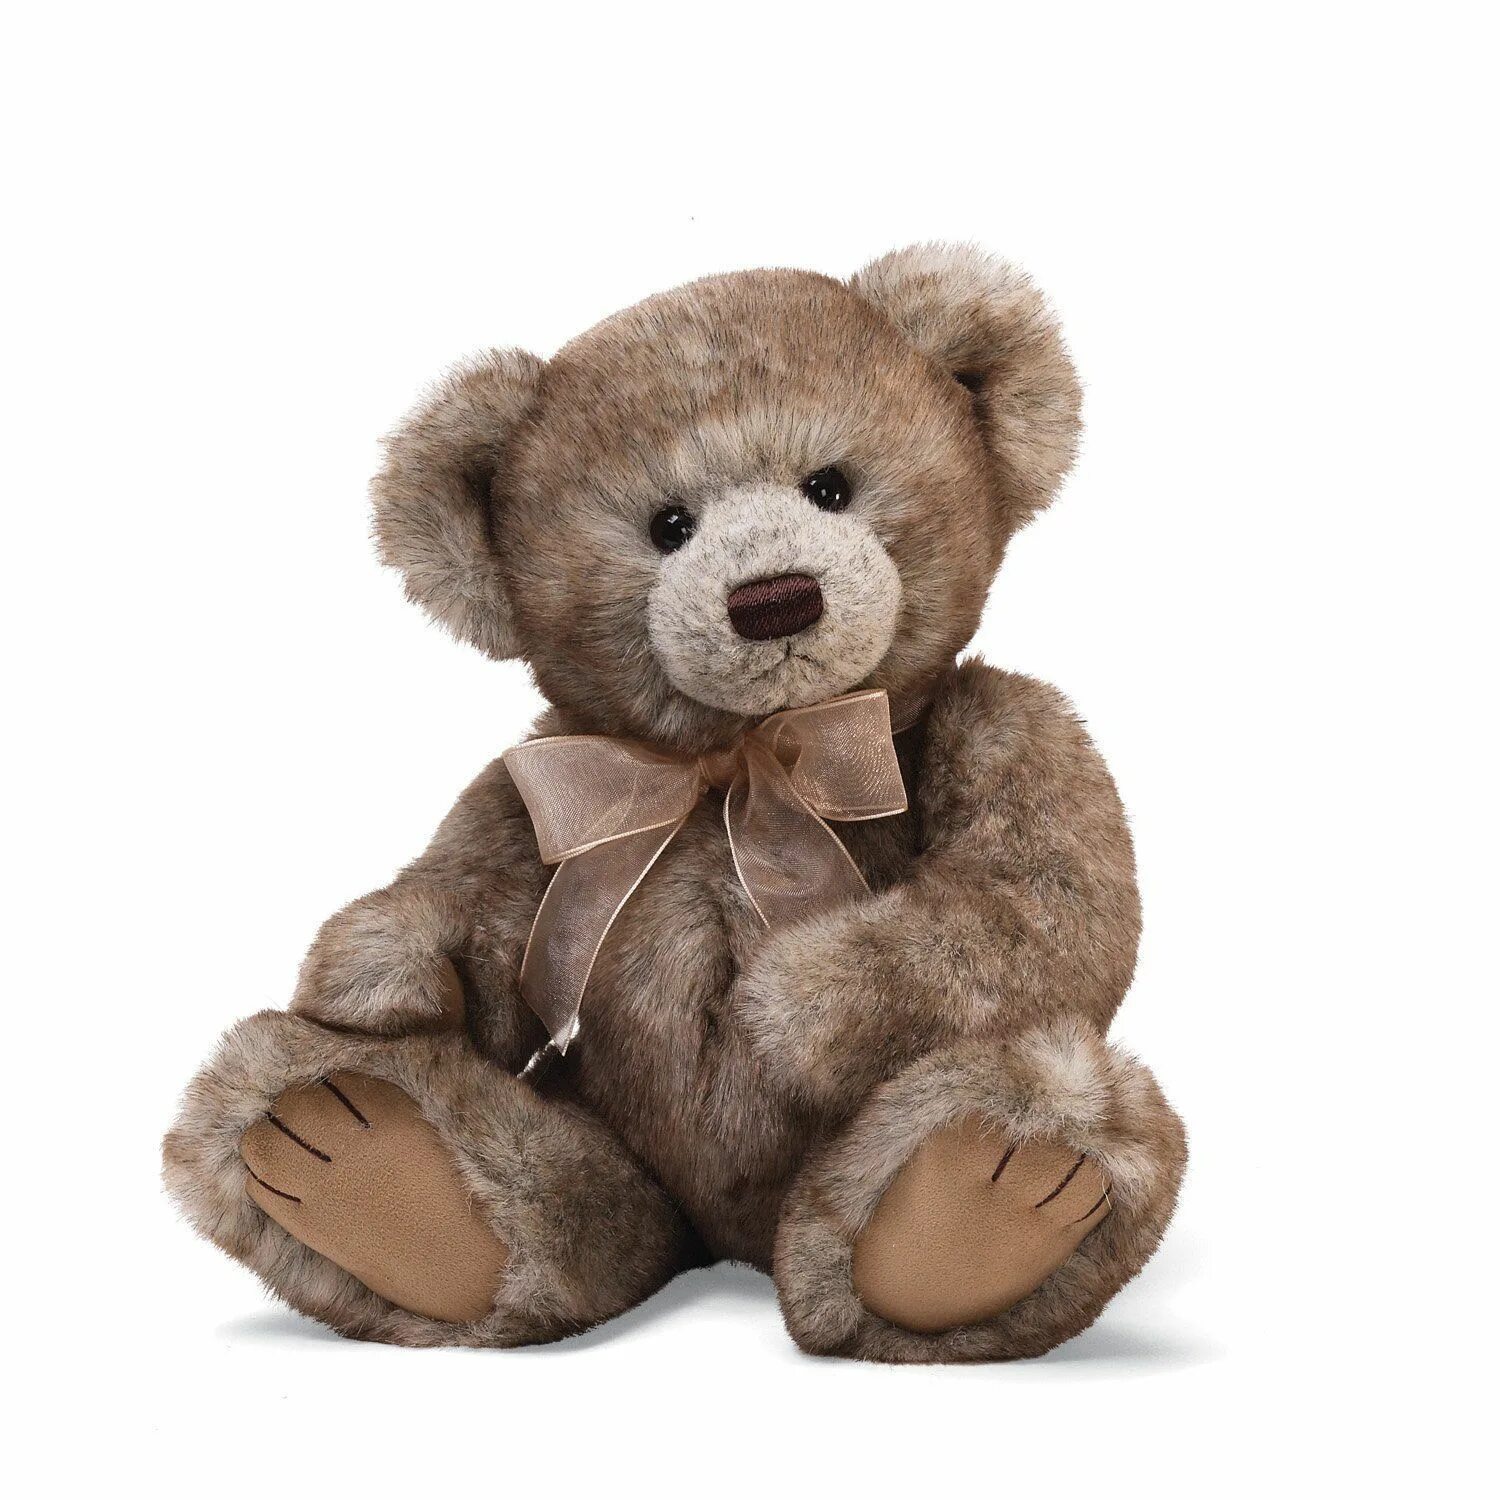 A brown teddy bear. Тедди Беар серый. Тэдди Мэйсон. Игрушечный Медвежонок коричневый. Плюшевый мишка коричневый.